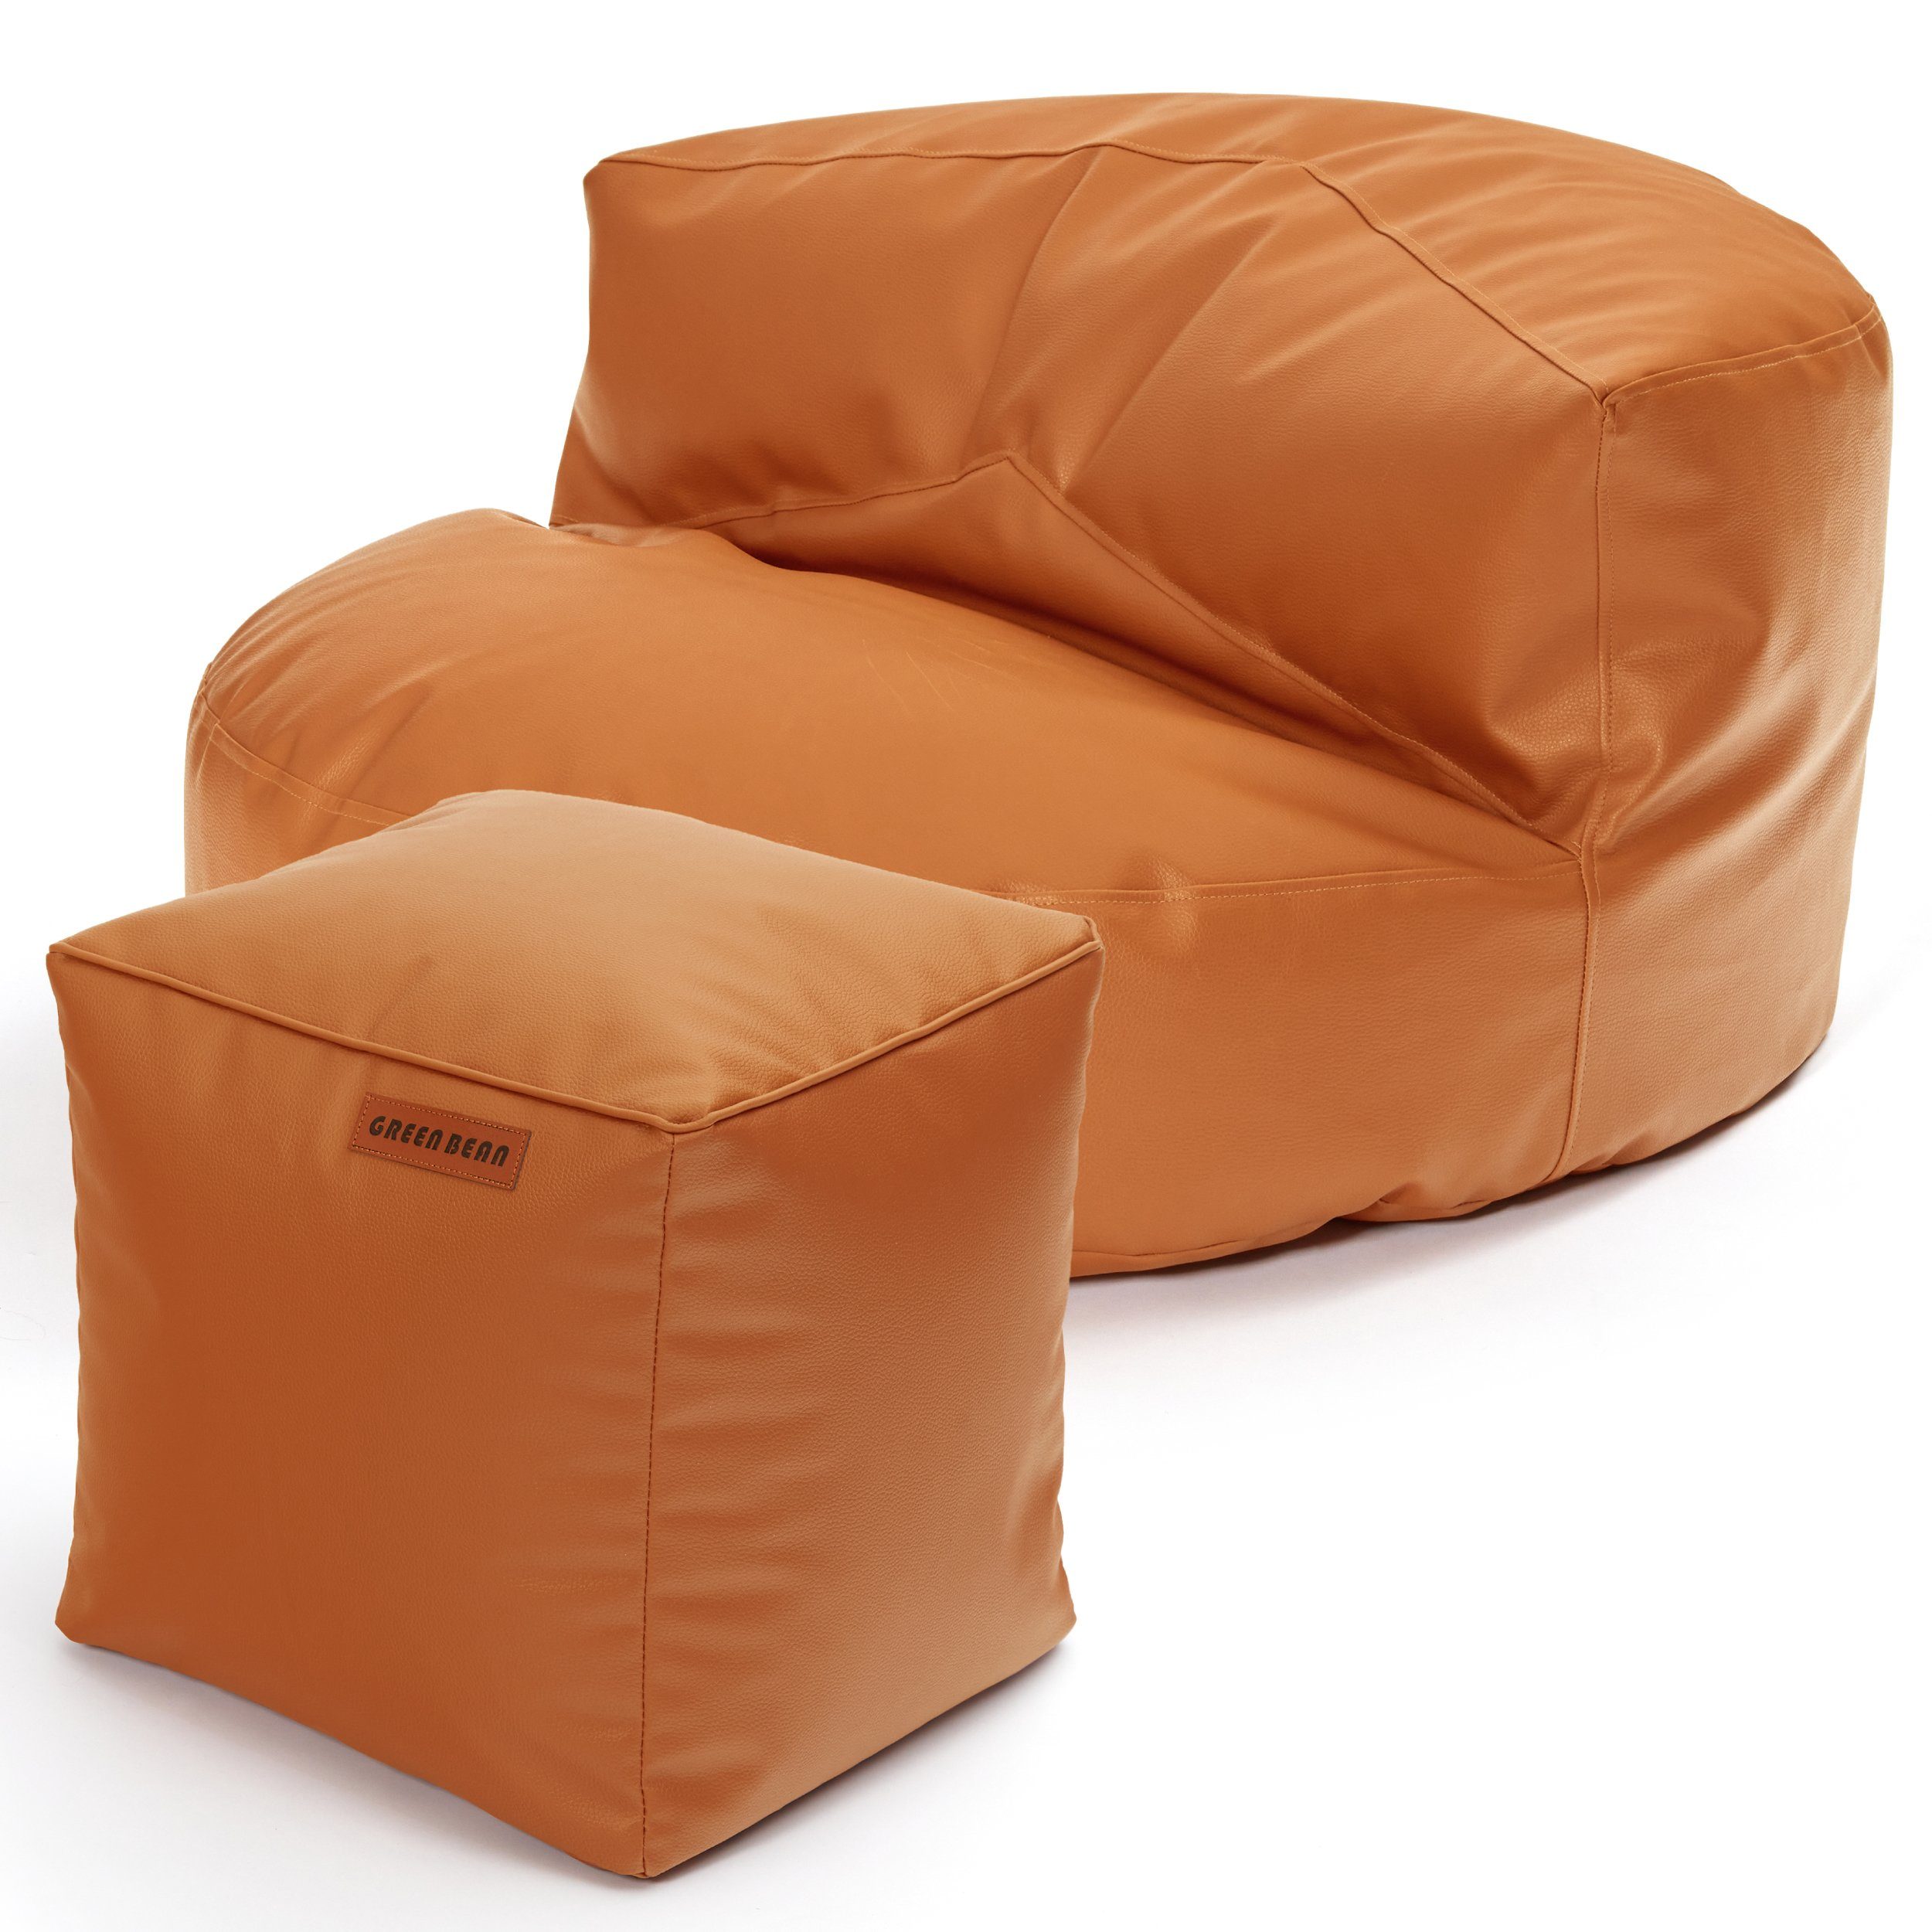 Green Bean Sitzsack Sofa + Pouf Sitzsack als Set aus Kunstleder, EPS Perlen Füllung ca. 90x45cm - Couch XXL Riesensitzsack Lounge Cube Cognac